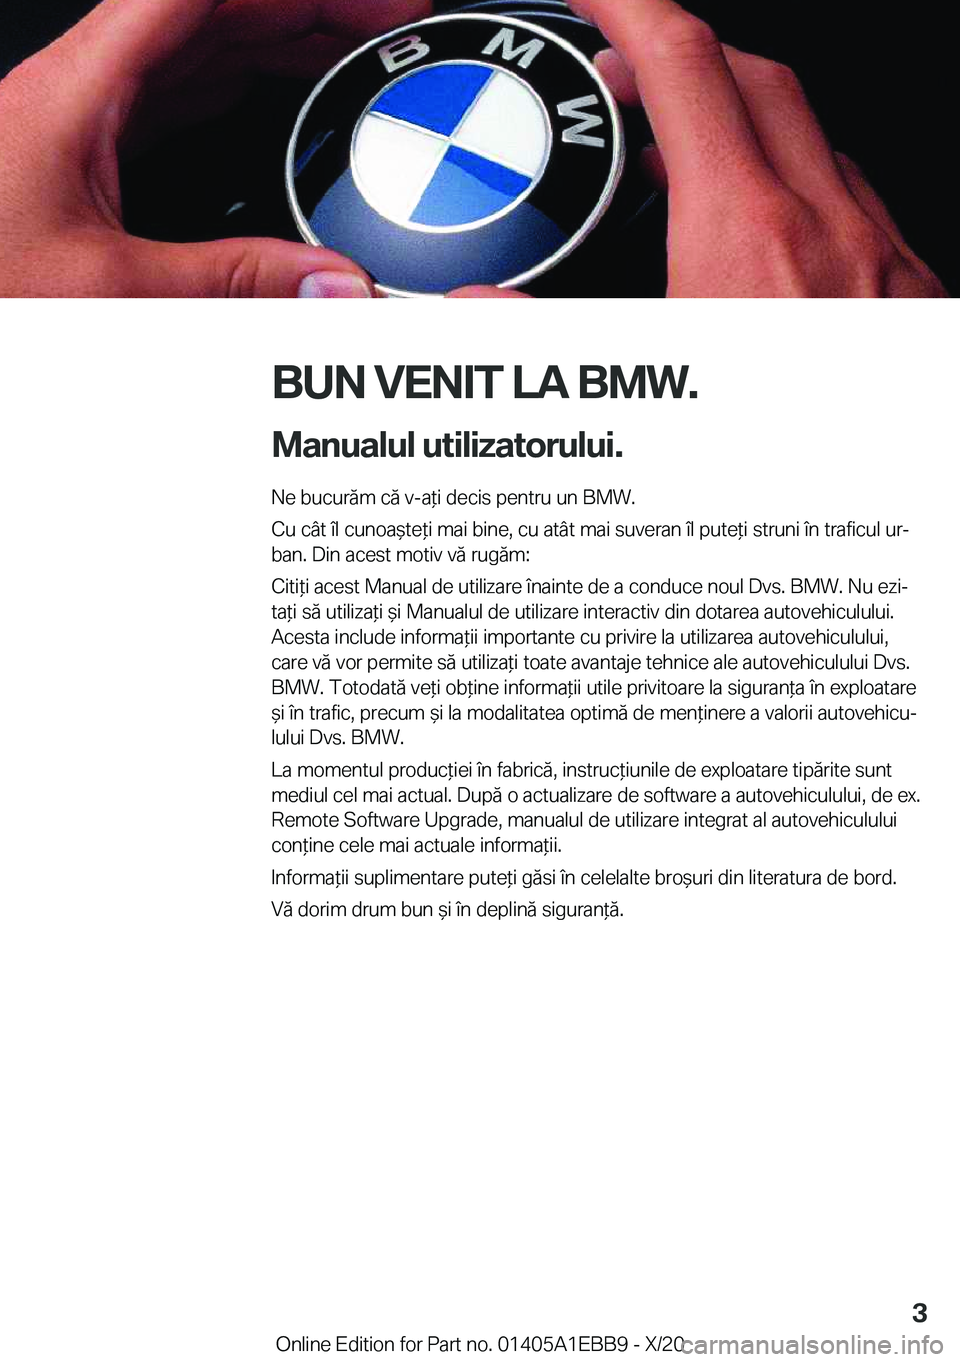 BMW 3 SERIES 2021  Ghiduri De Utilizare (in Romanian) �B�U�N��V�E�N�I�T��L�A��B�M�W�.�M�a�n�u�a�l�u�l��u�t�i�l�i�z�a�t�o�r�u�l�u�i�.
�N�e��b�u�c�u�r�ă�m��c�ă��v�-�a*�i��d�e�c�i�s��p�e�n�t�r�u��u�n��B�M�W�.
�C�u��c�